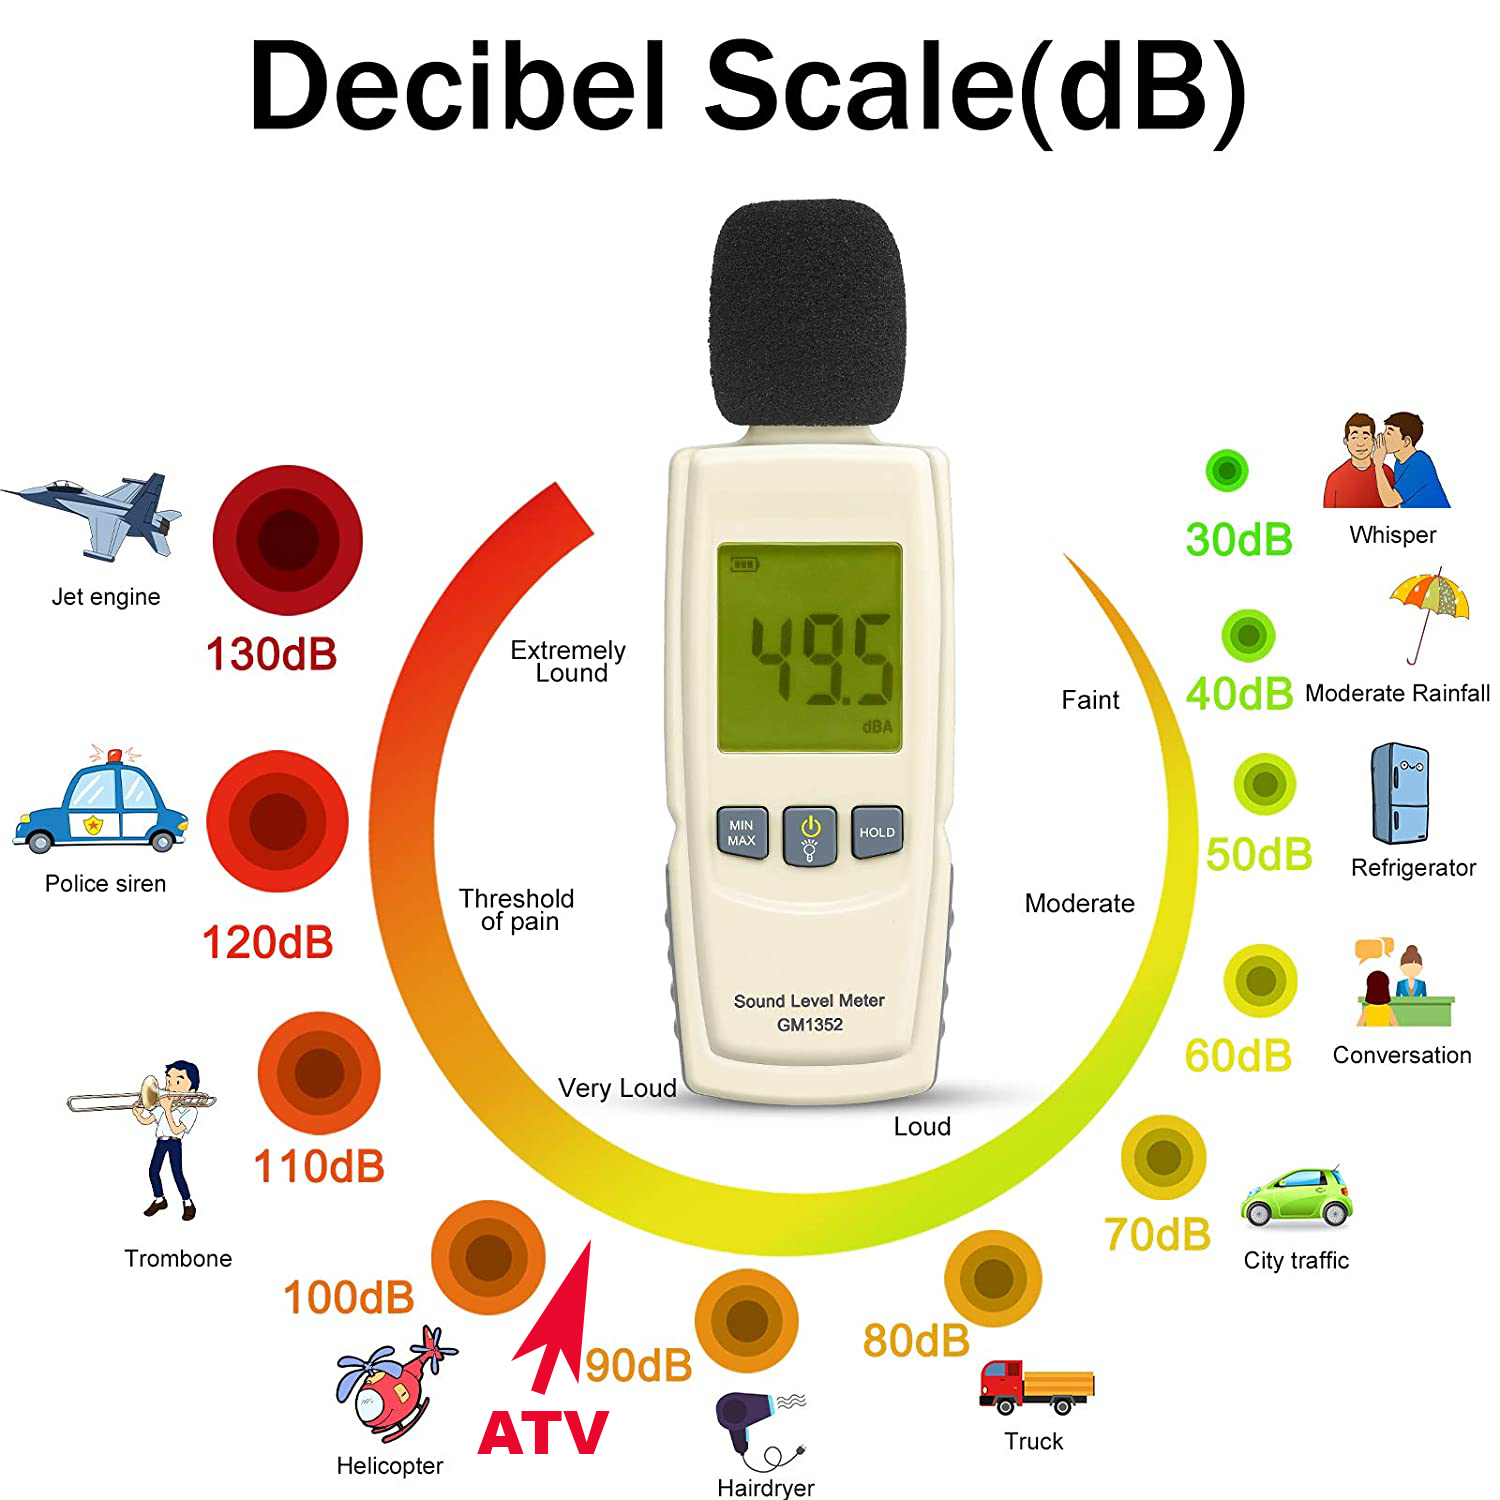 inventor of decibel scale